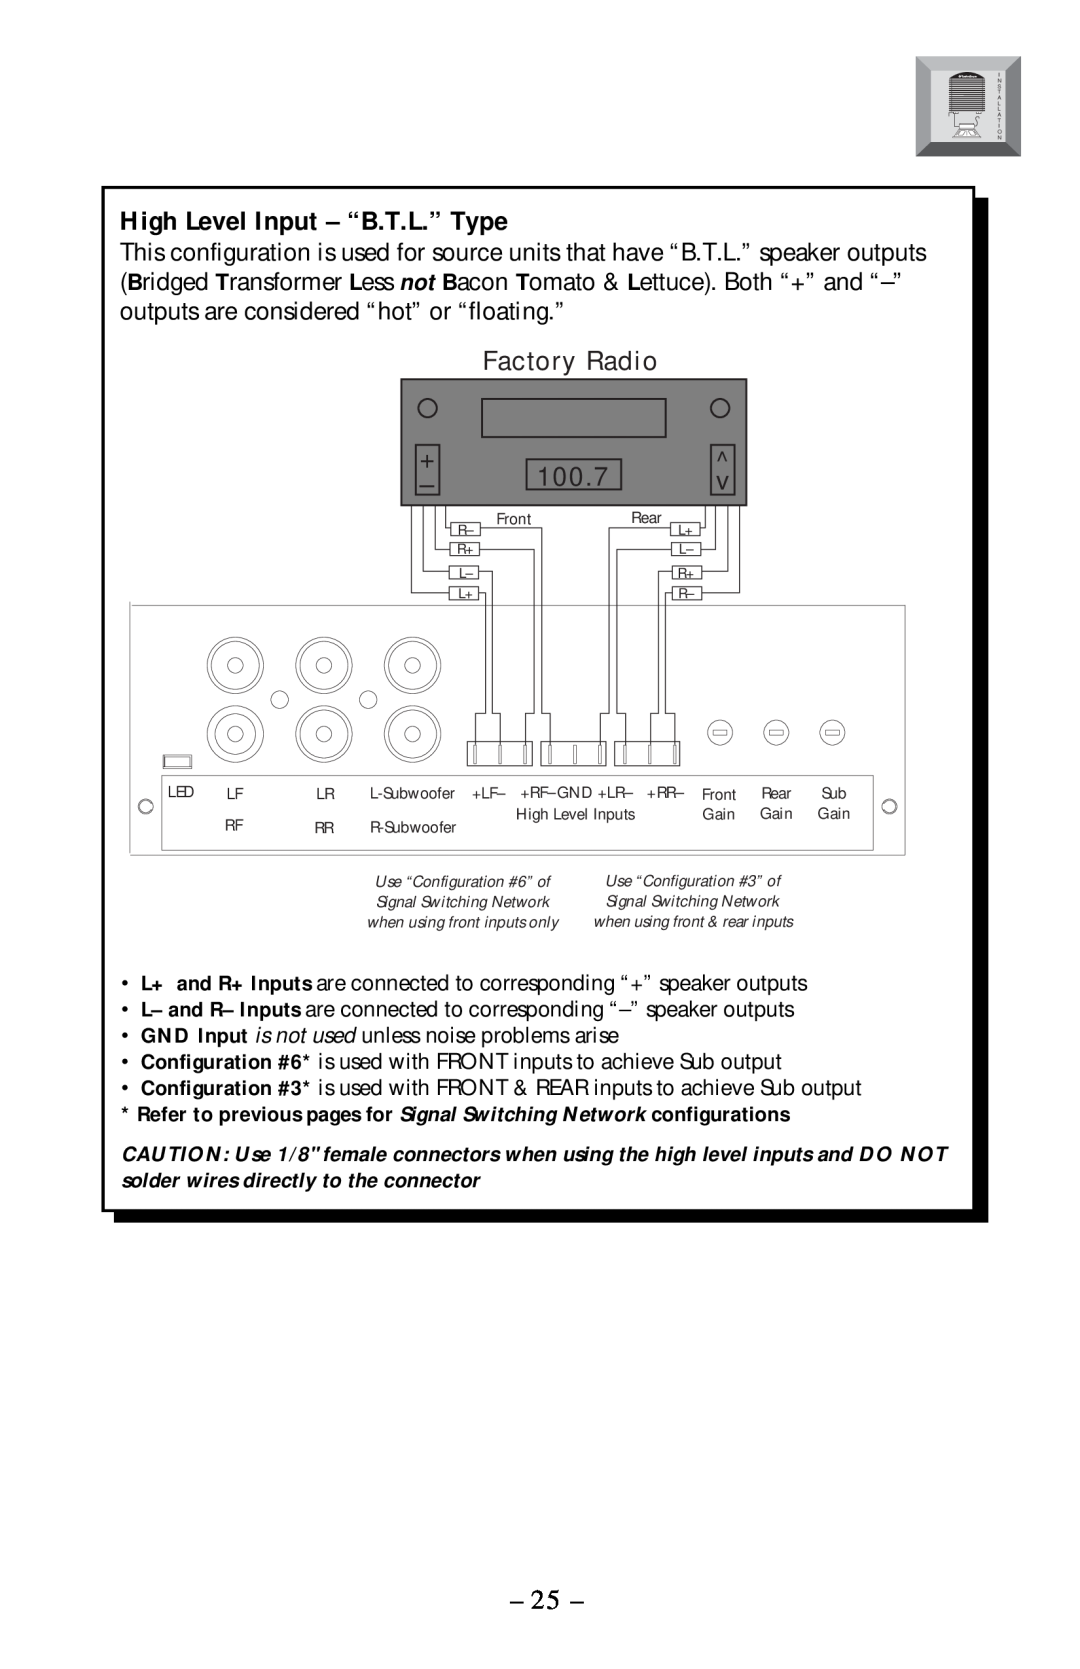 Rockford Fosgate 5.3x manual High Level Input - “B.T.L.” Type, Factory Radio, 100.7 